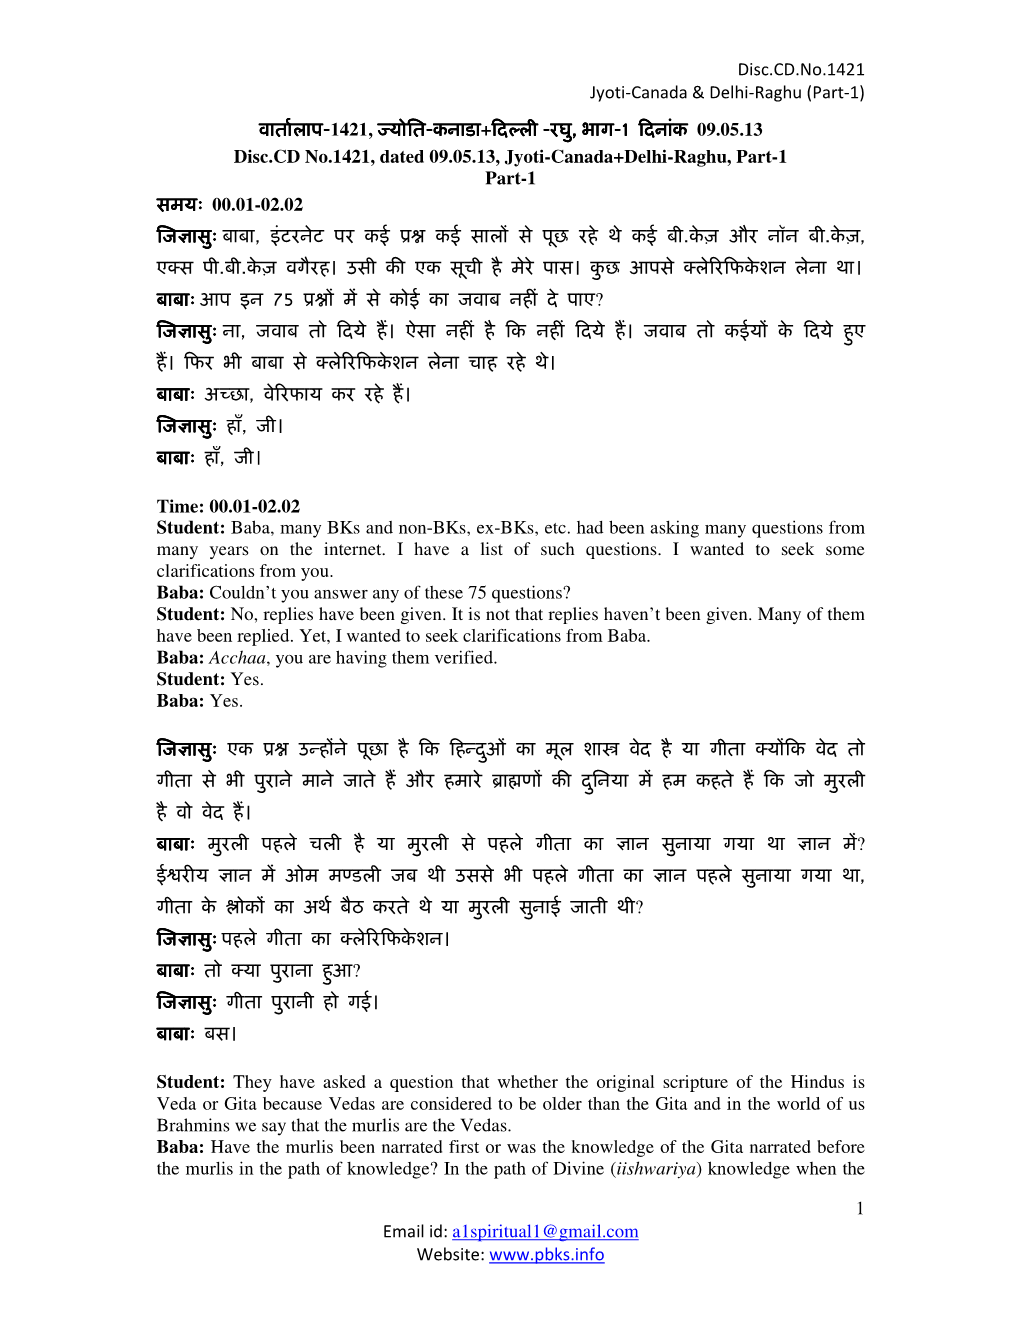 Disc.CD.No.1421 Jyoti-Canada & Delhi-Raghu (Part-1) 1 Email Id